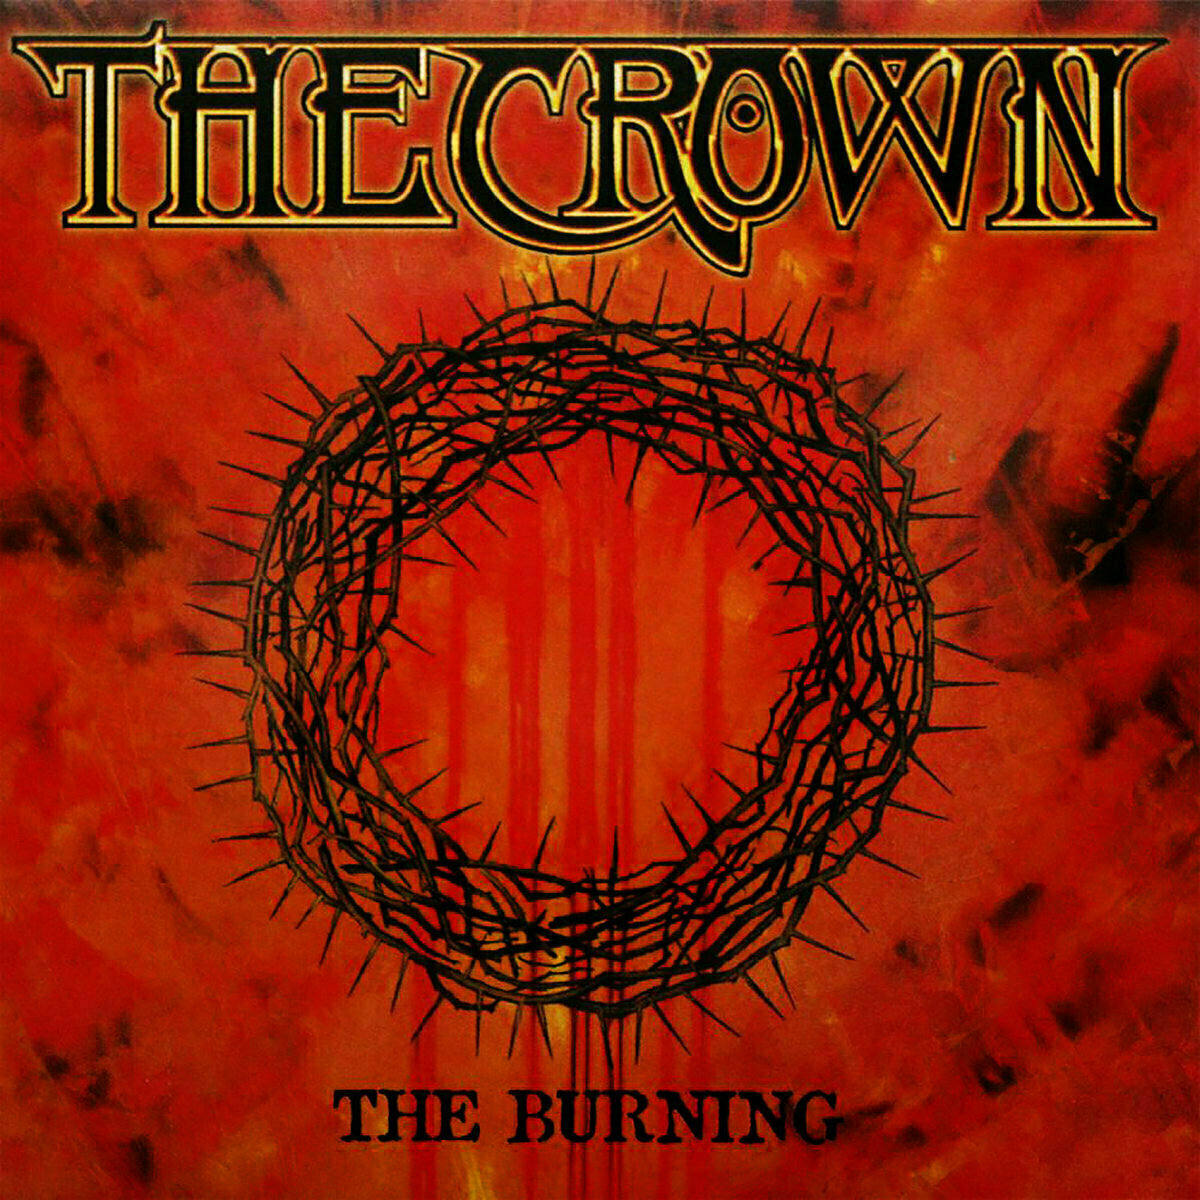 Vinyl Record The Crown - The Burning (LP)